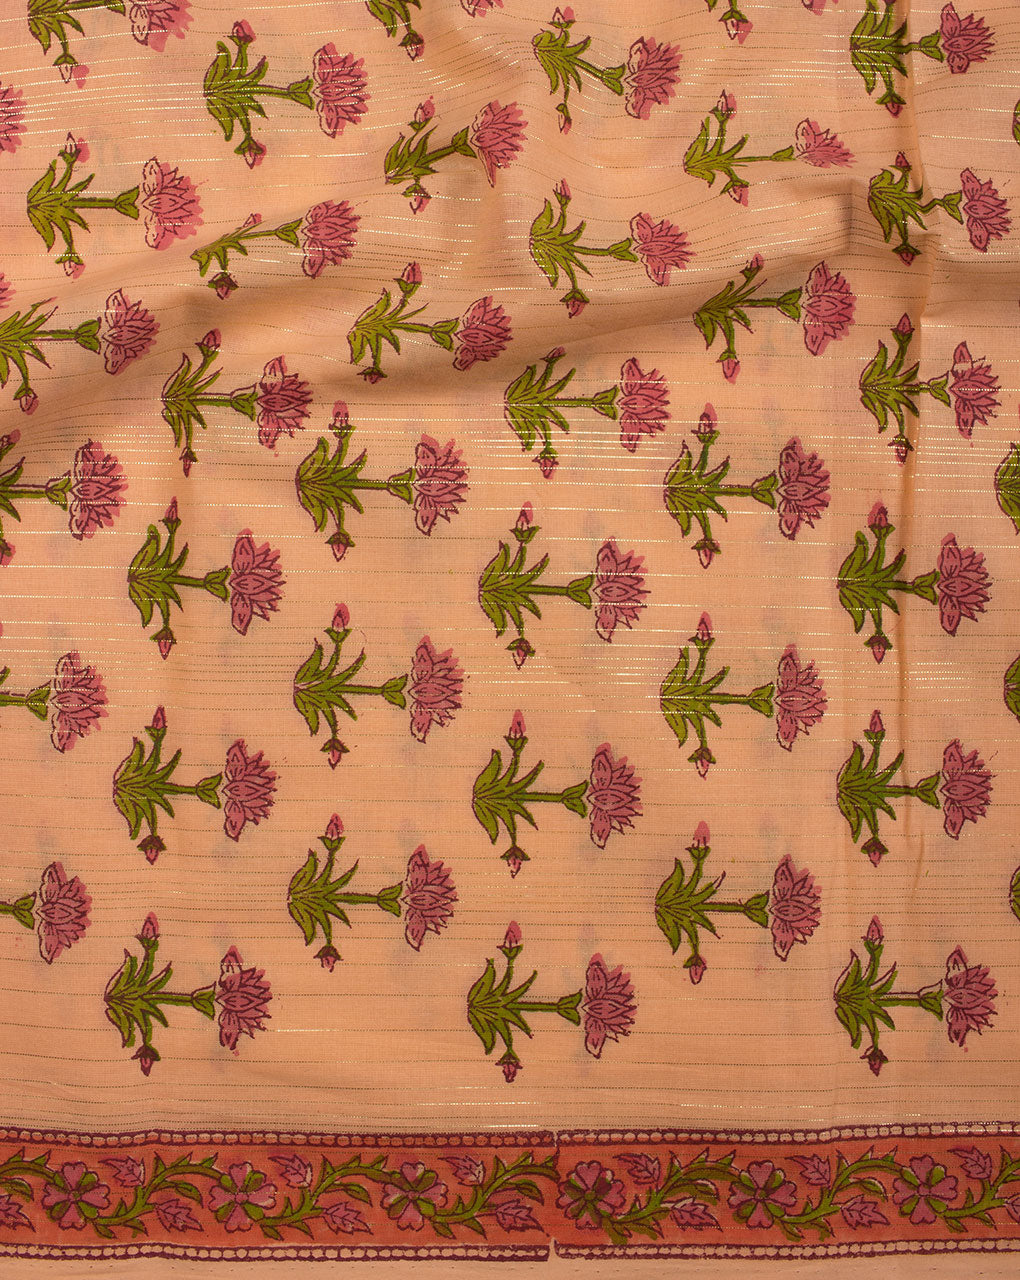 Screen Print Lurex Cotton Fabric - Fabriclore.com